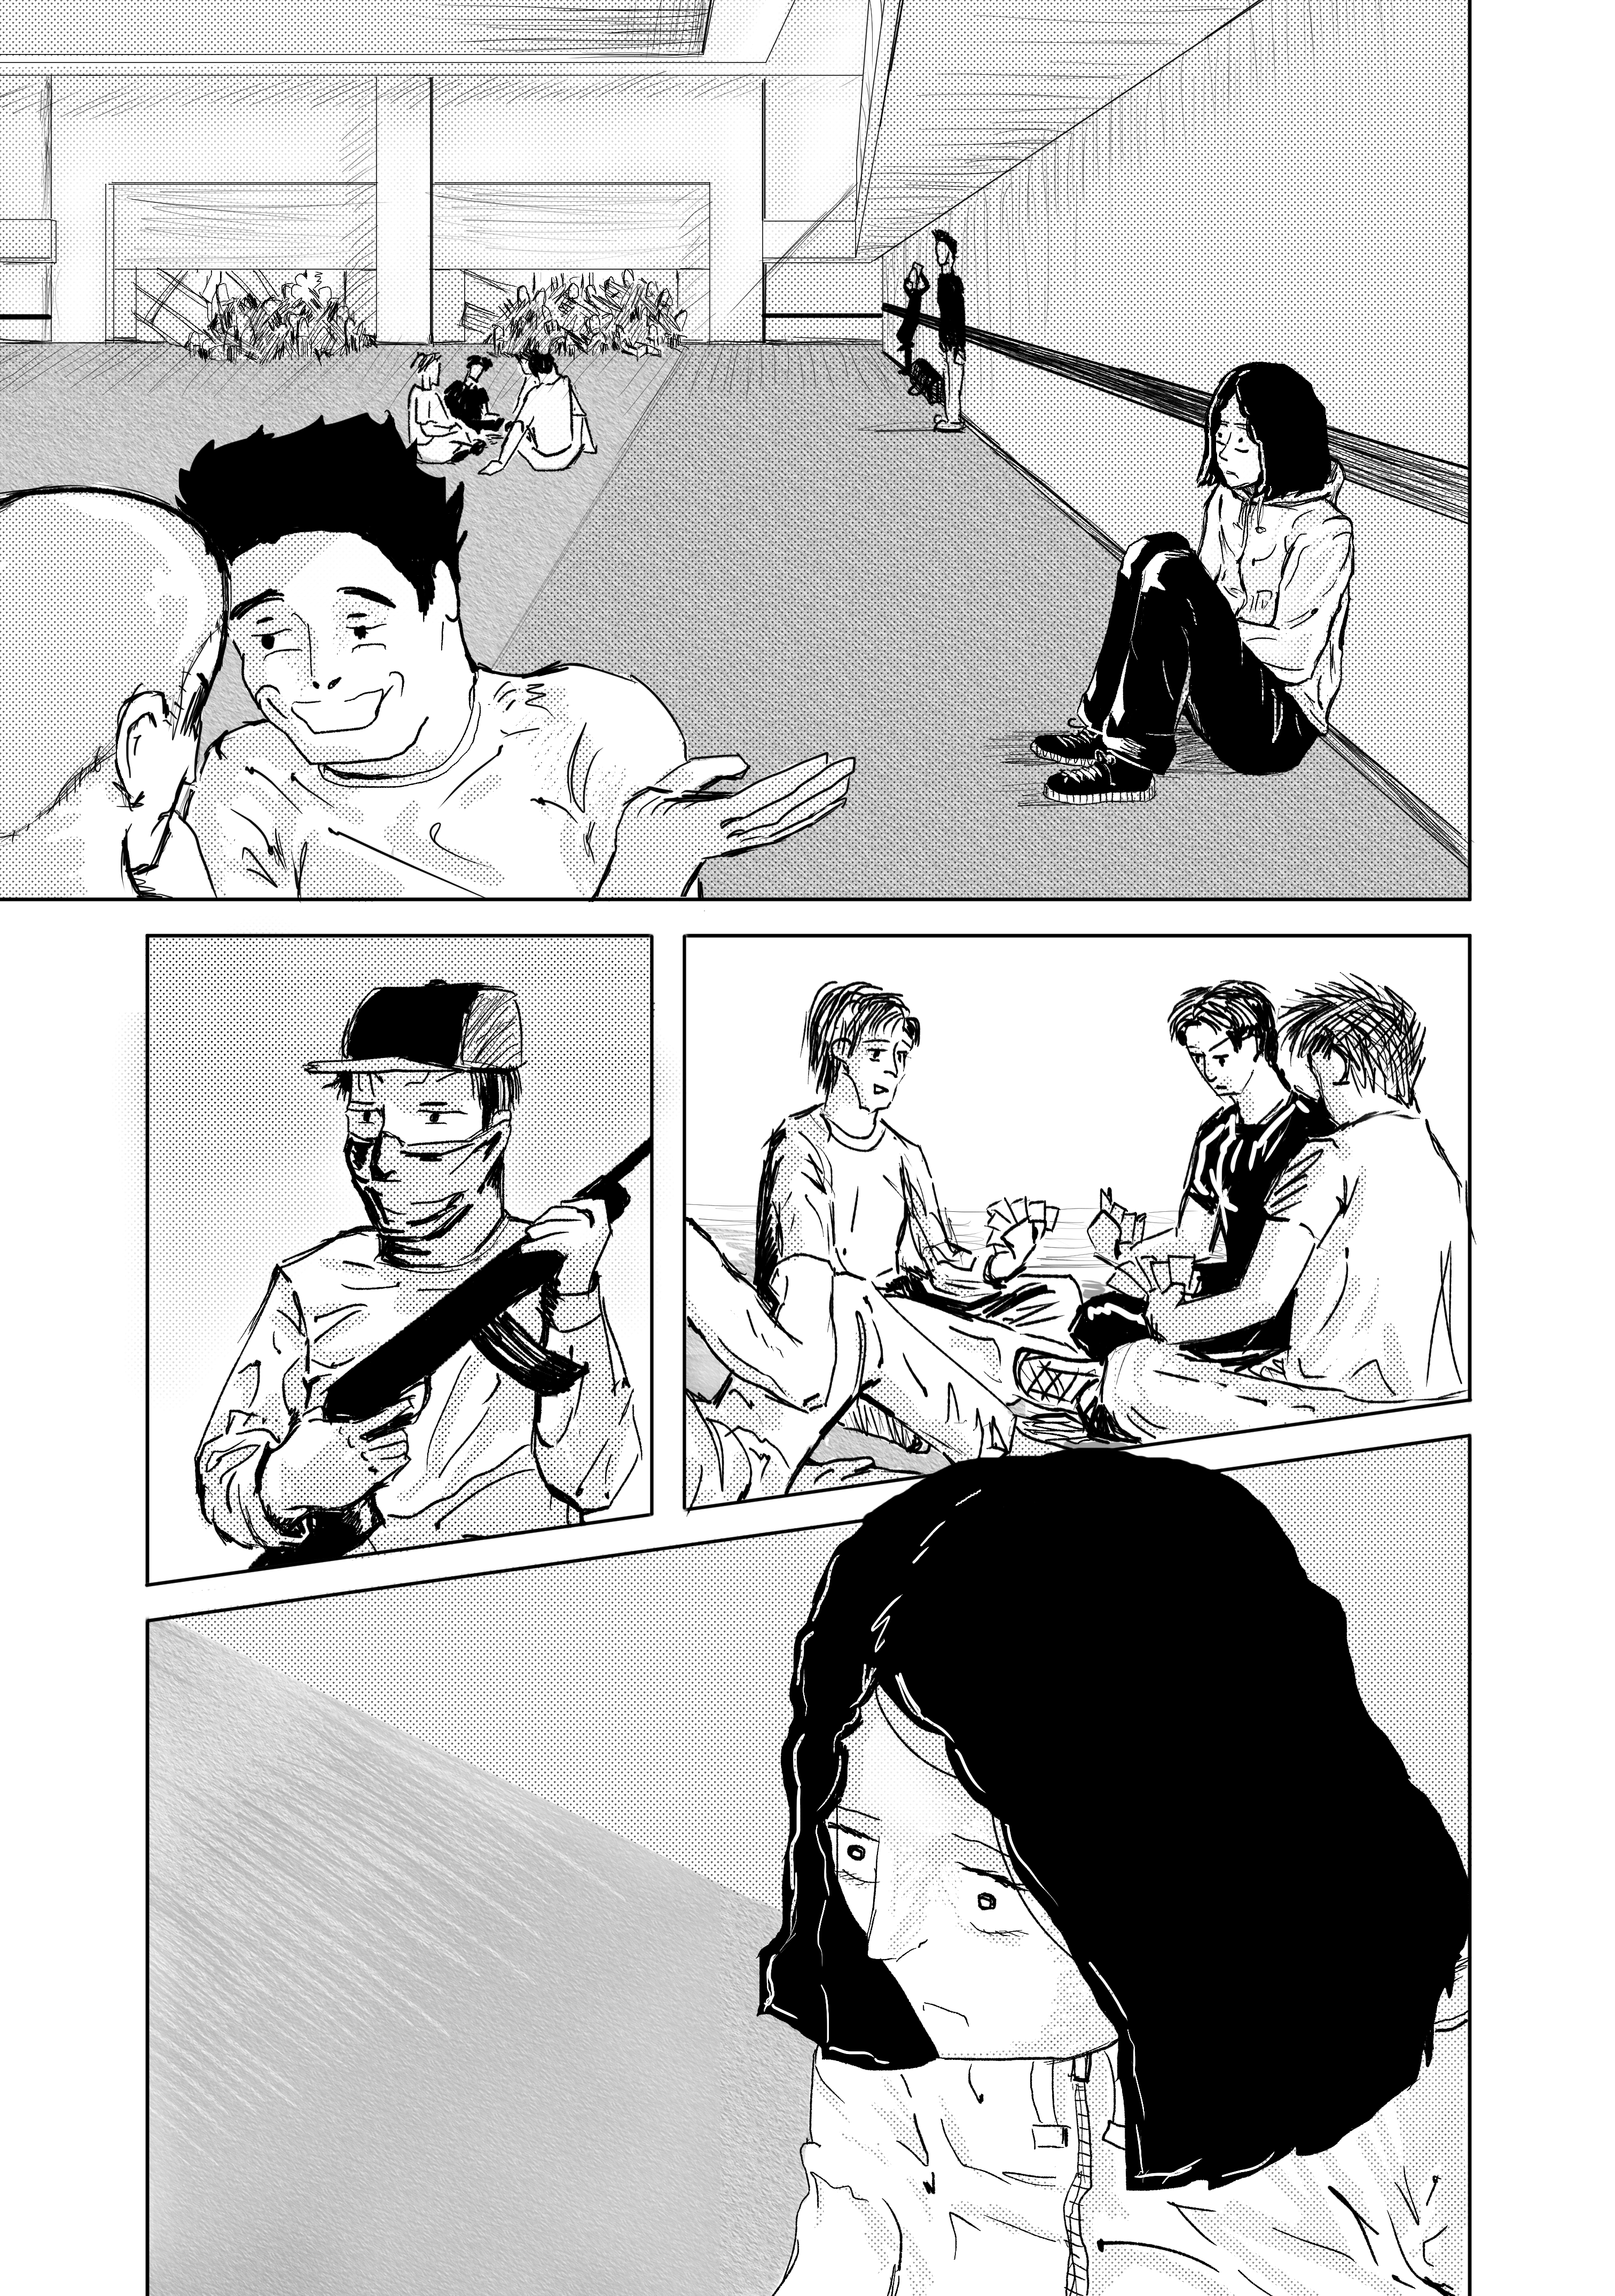 Dickhead (Censored) - 1 page 4-8a3654e0